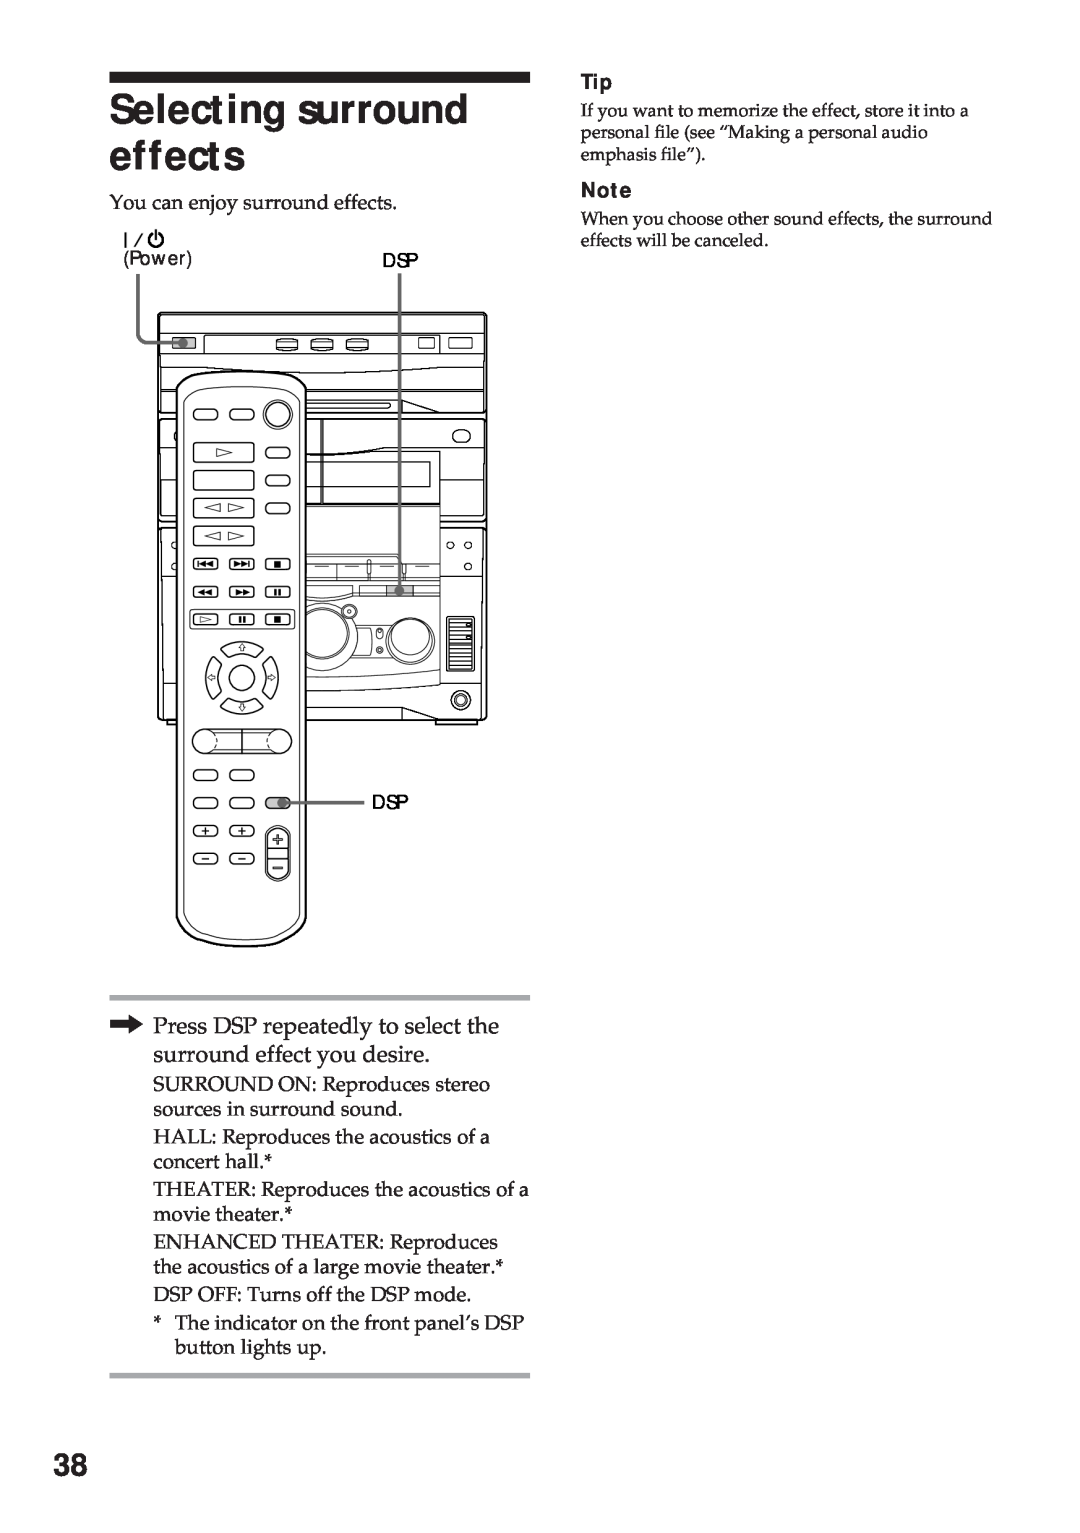 Sony MHC-GRX10AV operating instructions Selecting surround effects 